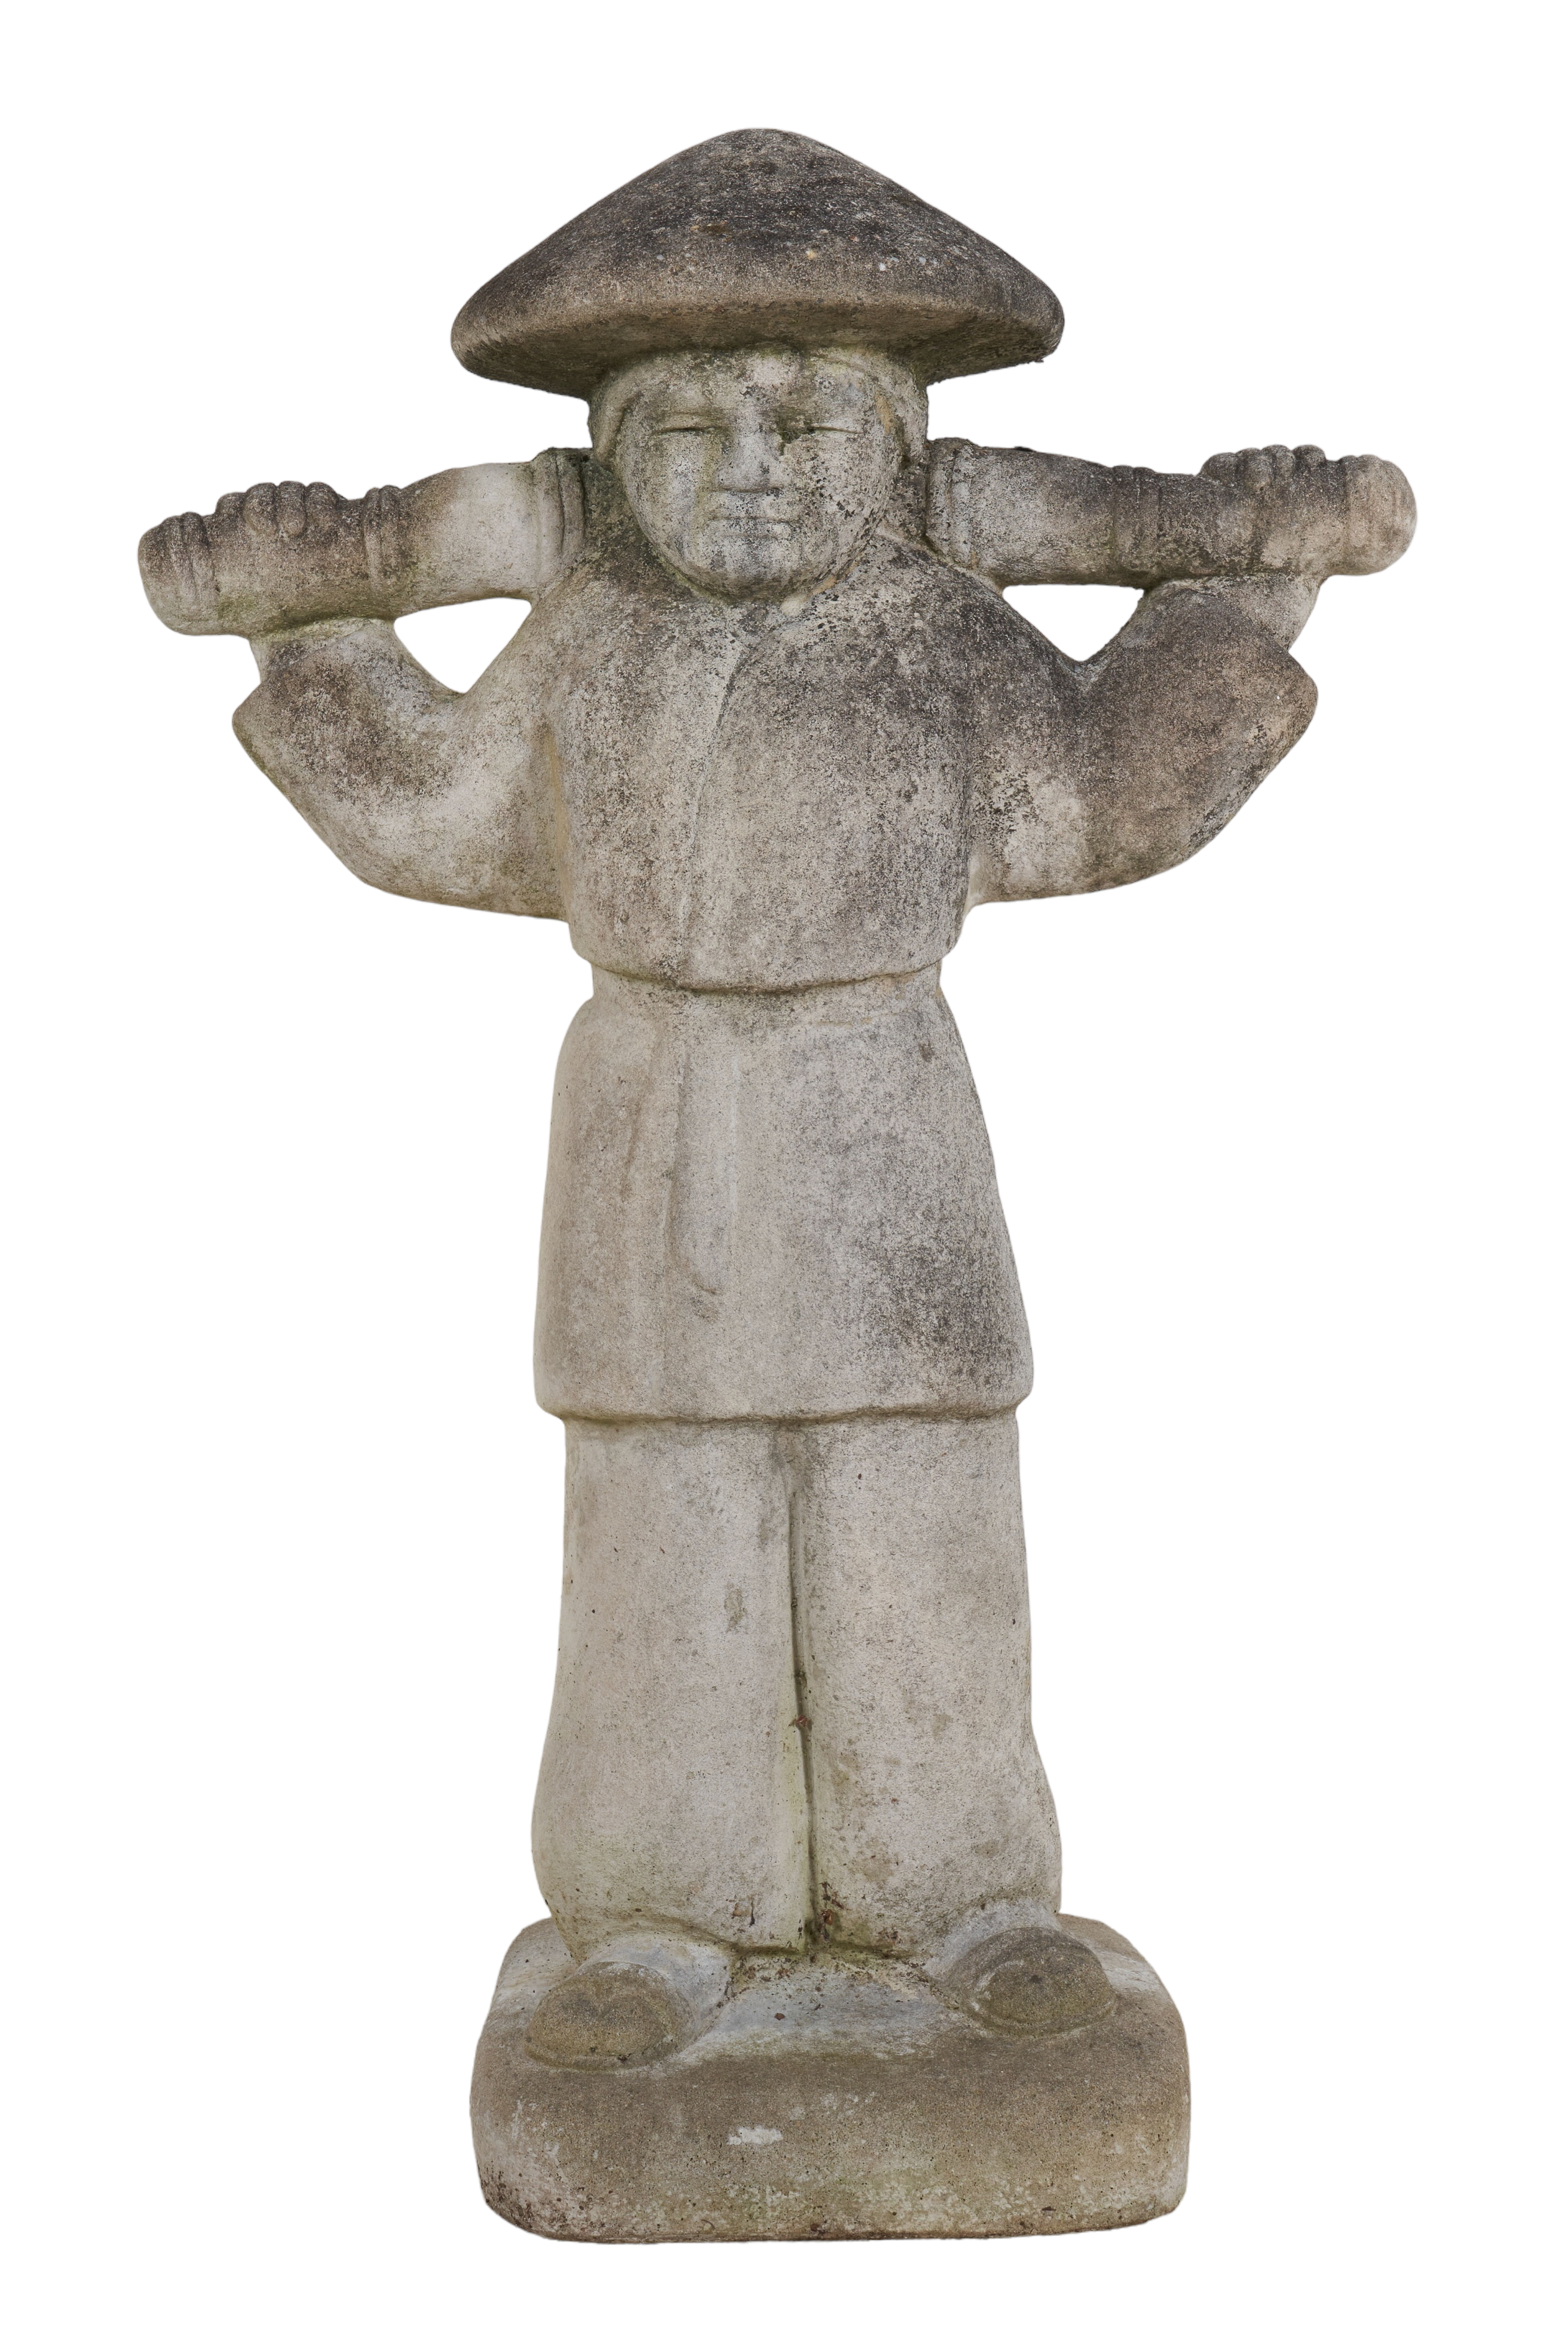 Cement statue of an Asian figure, 46h